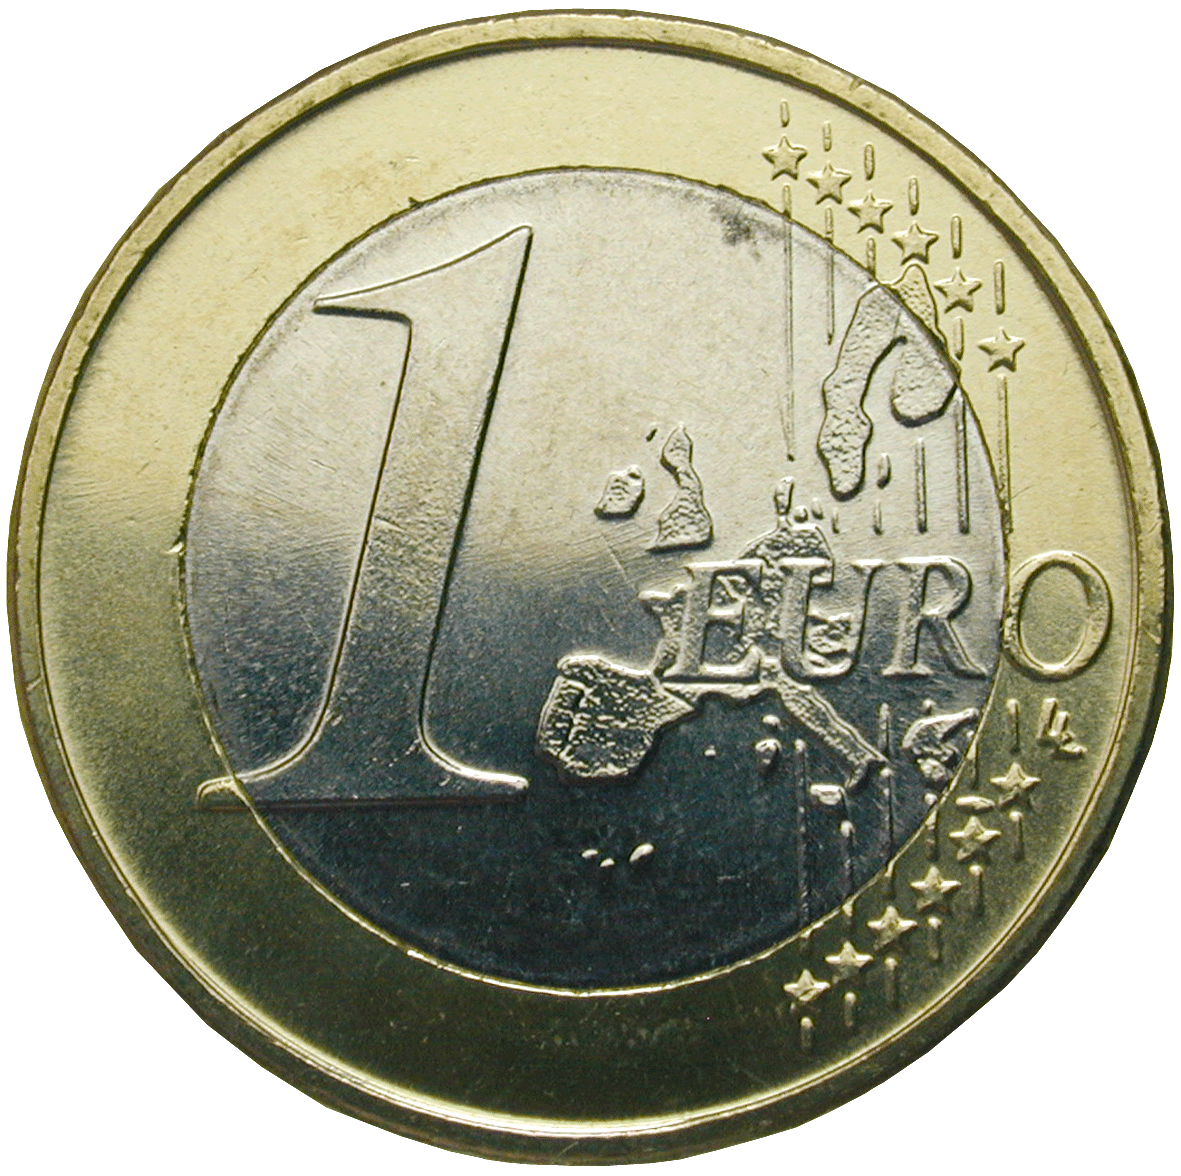 Republic of Greece, 1 Euro 2002 (reverse)